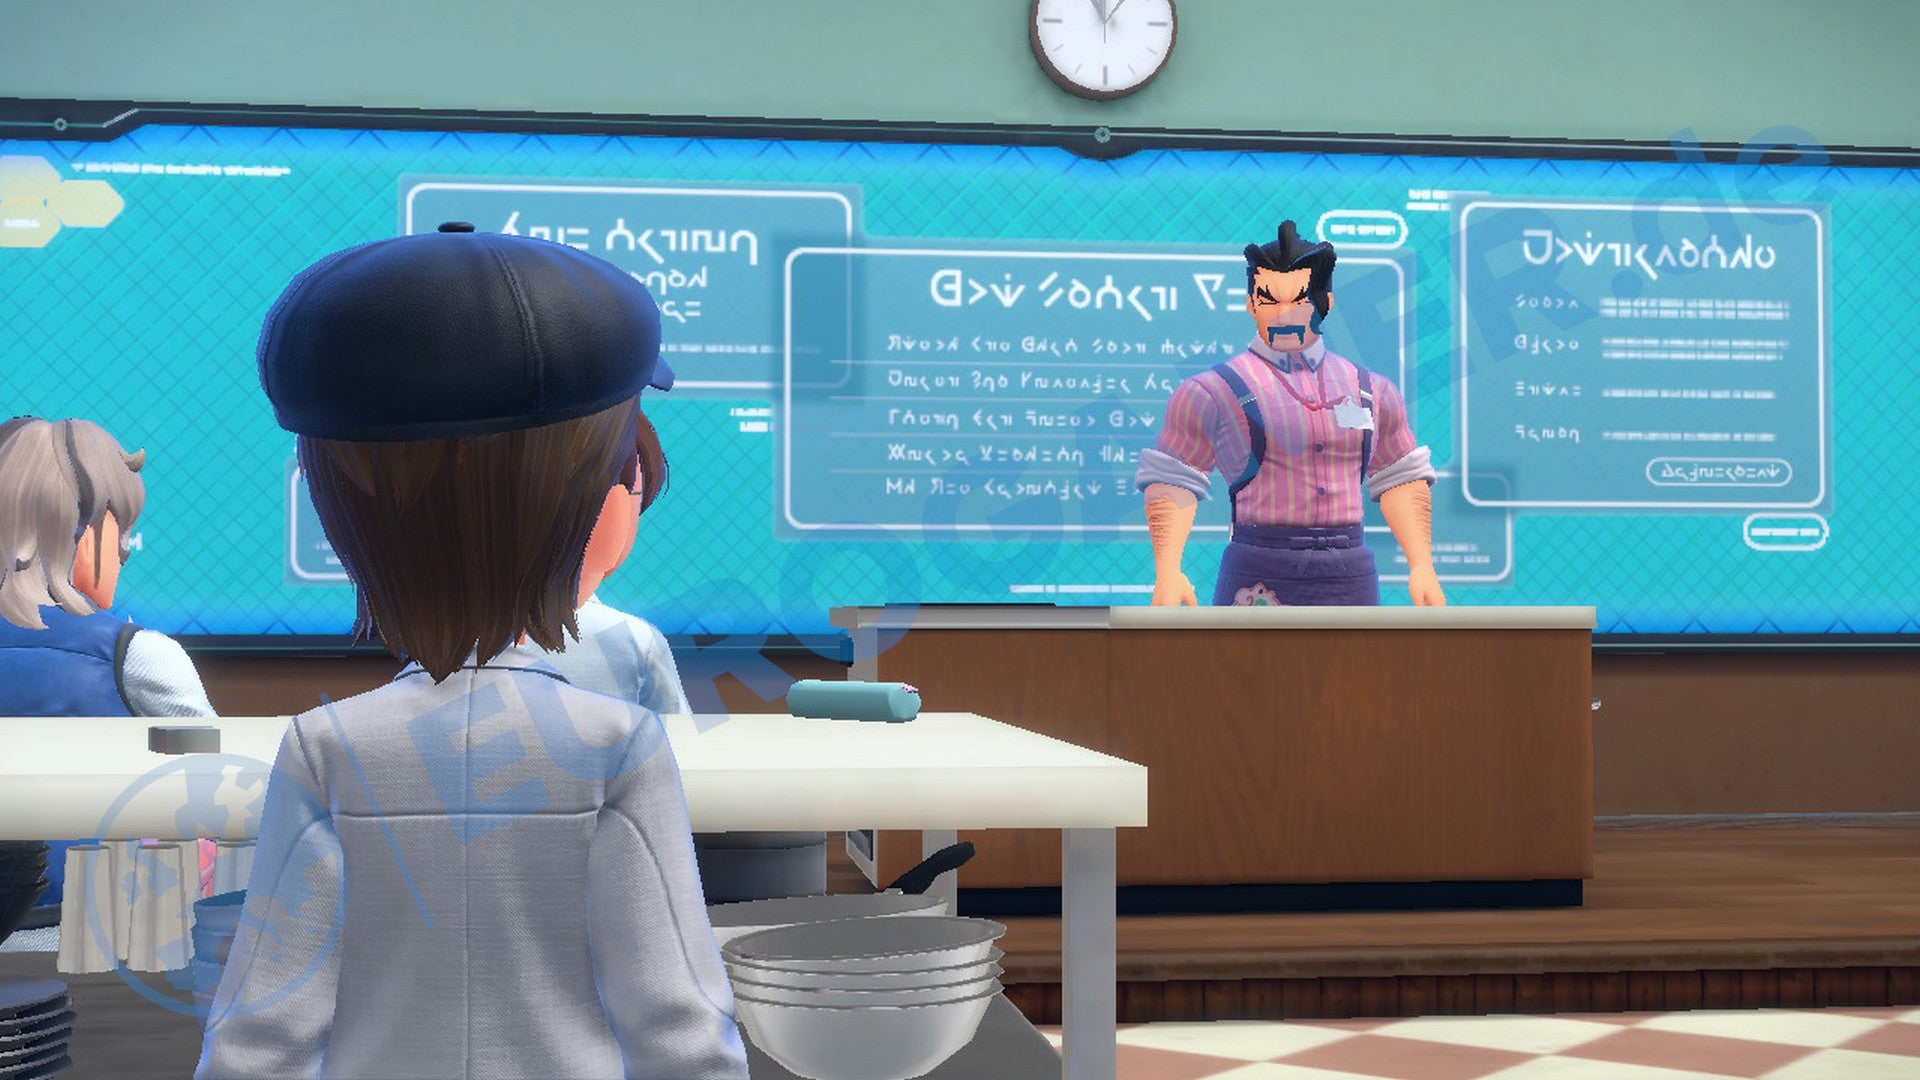 Saguaro lehrt Hauswirtschaft in Pokémon Karmesin und Purpur.